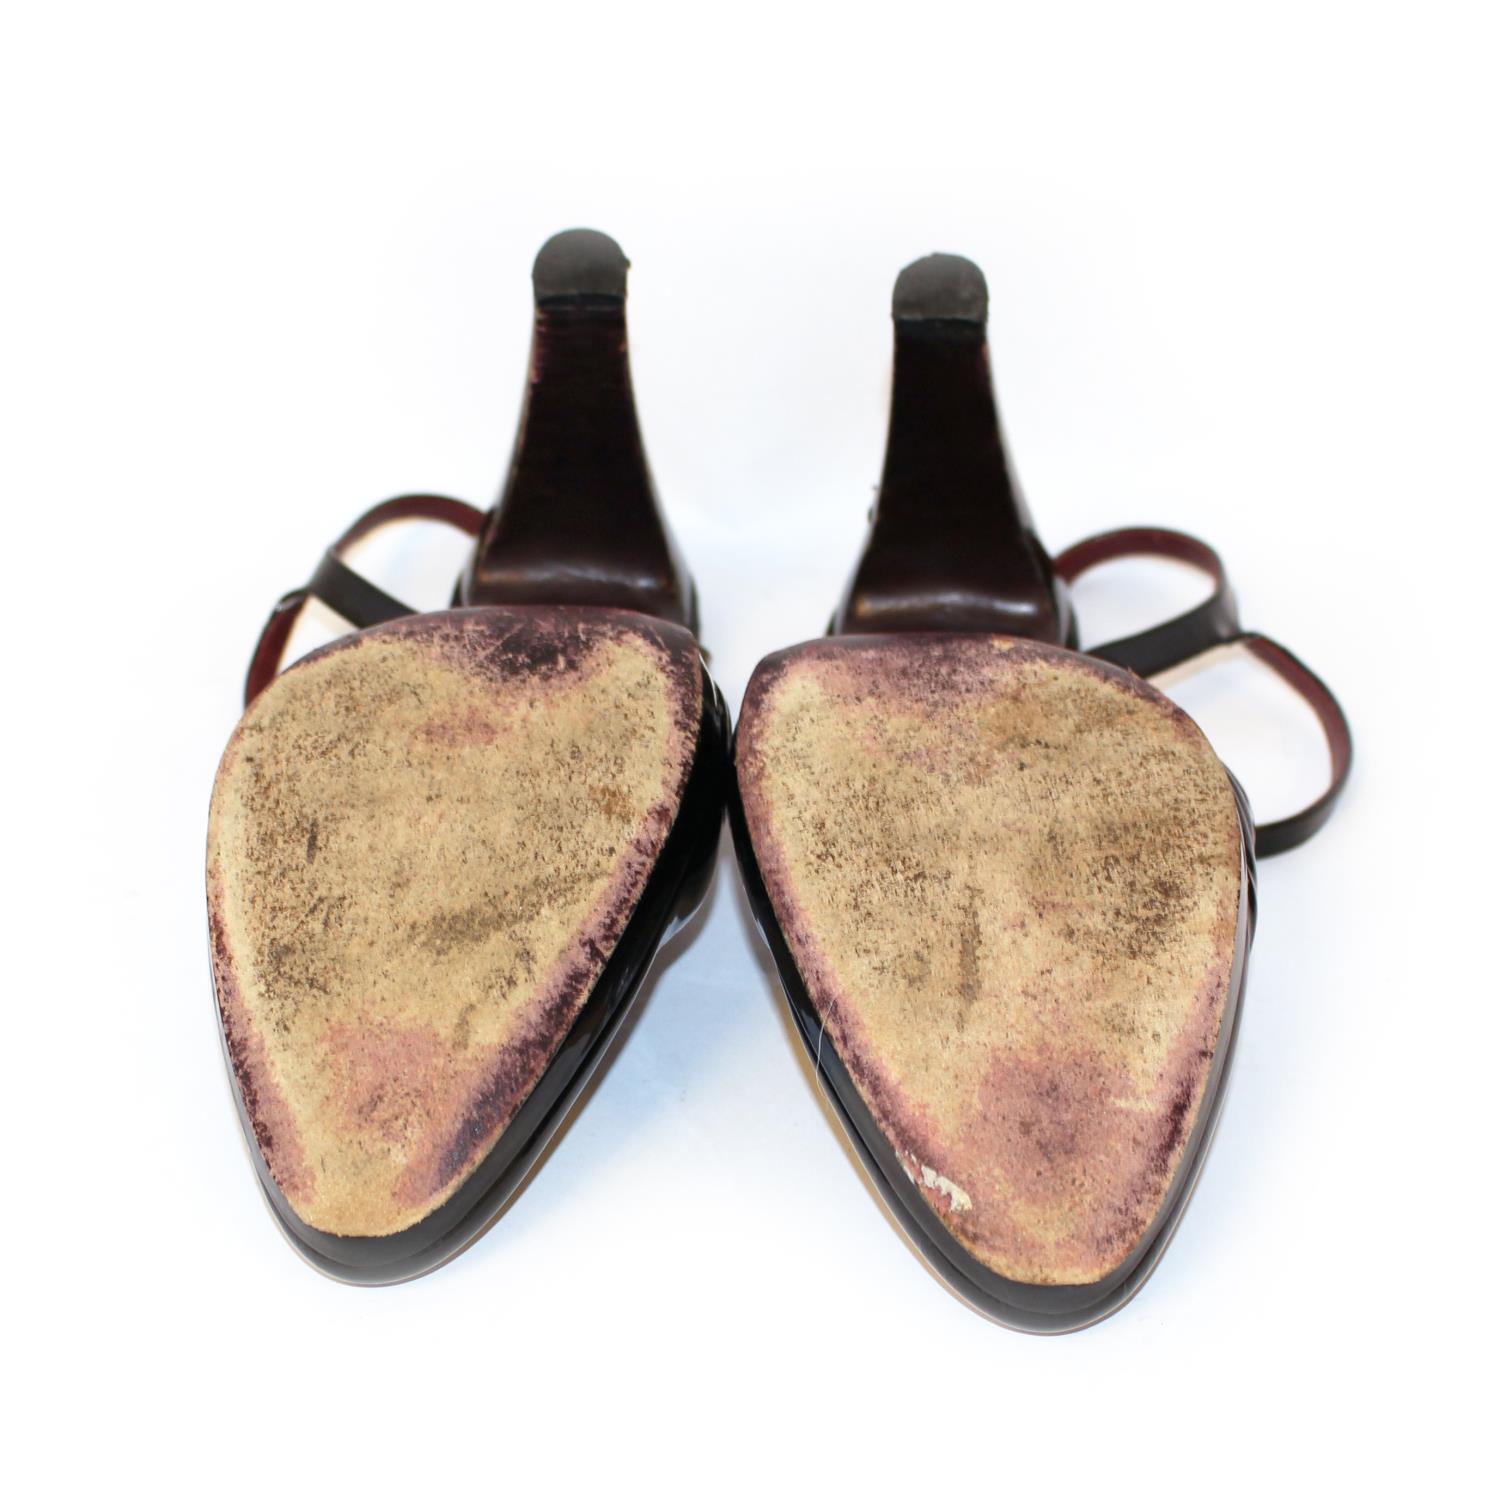 PRADA, BLACK PATENT LEATHER HEELS The heel strap with gilt metal buckles (size 39.5). (heel 11cm) B - Image 4 of 5